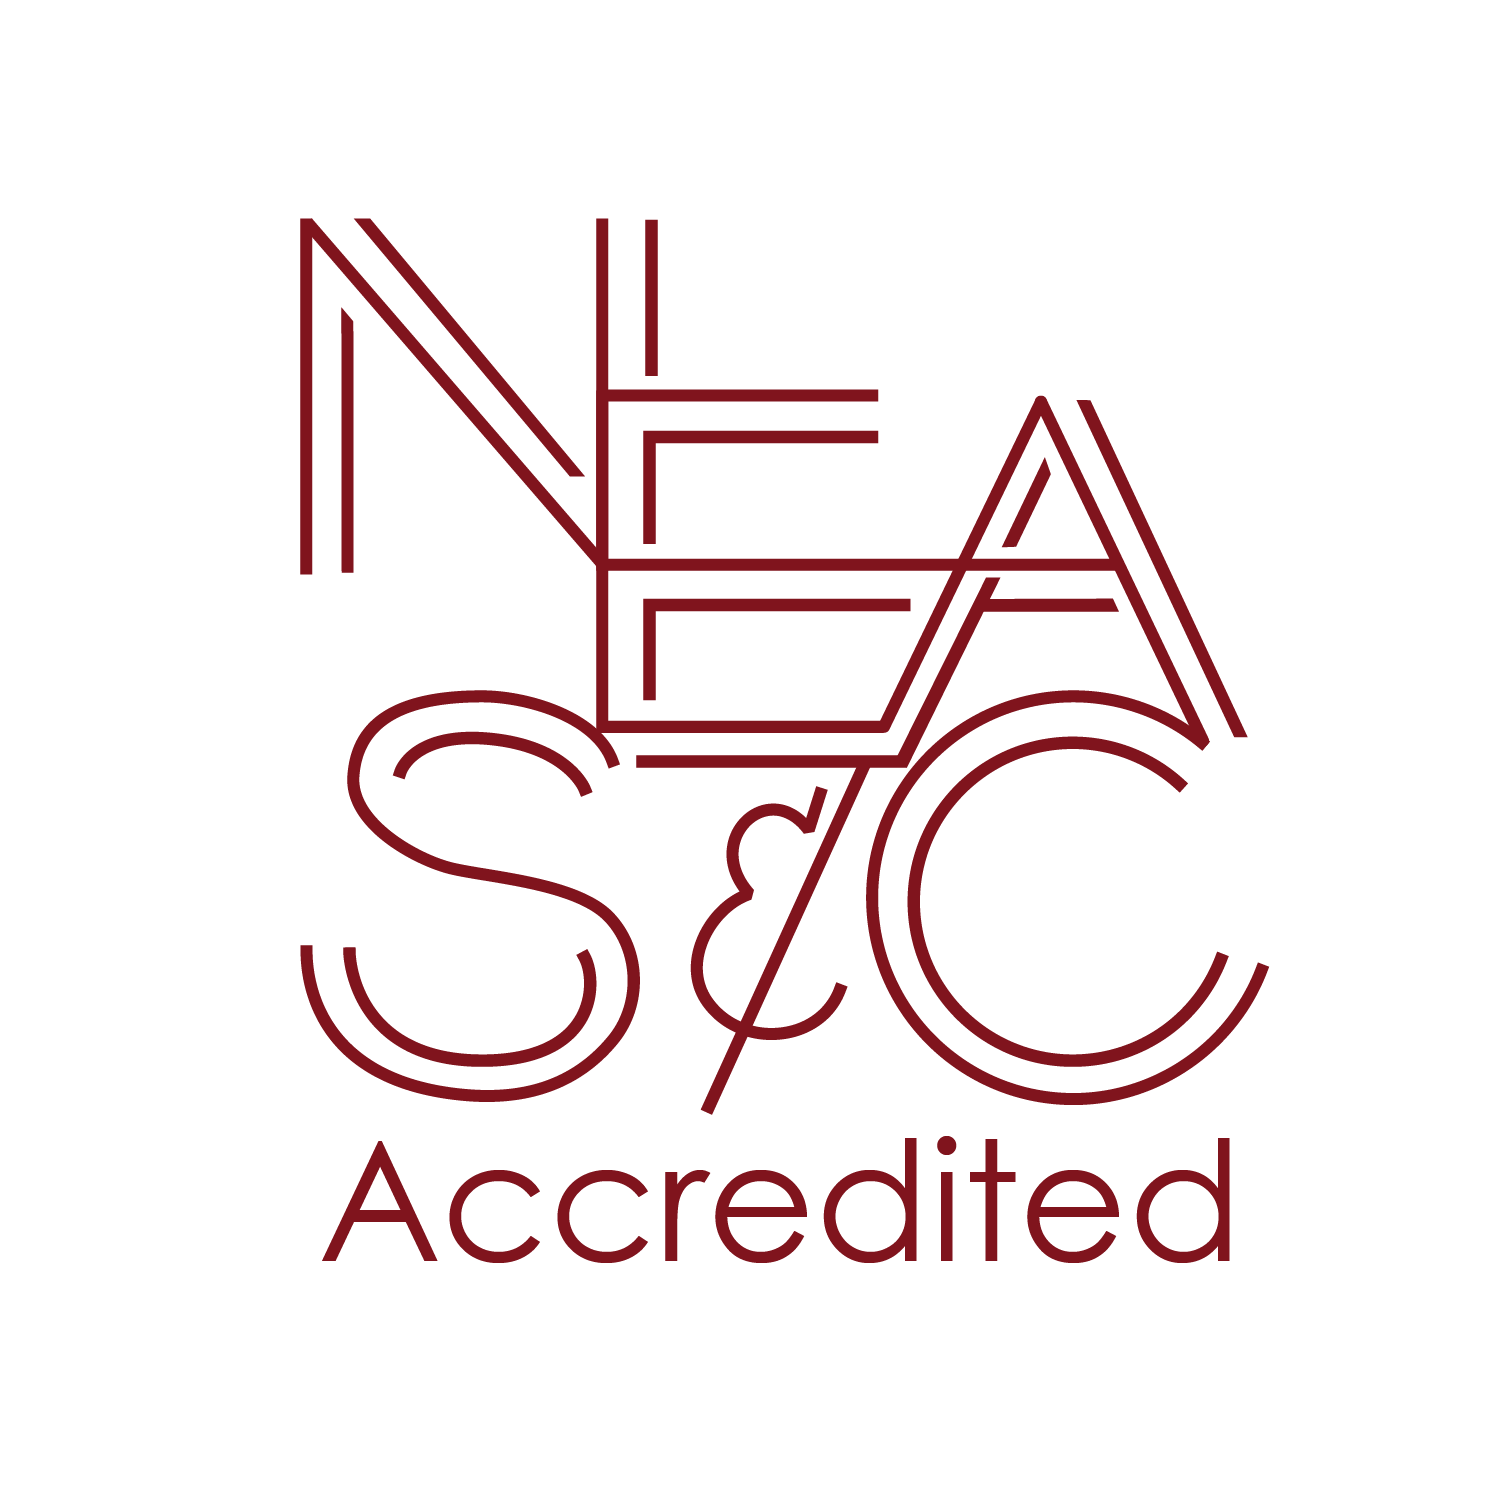 neasc-logo-accredited-web.png